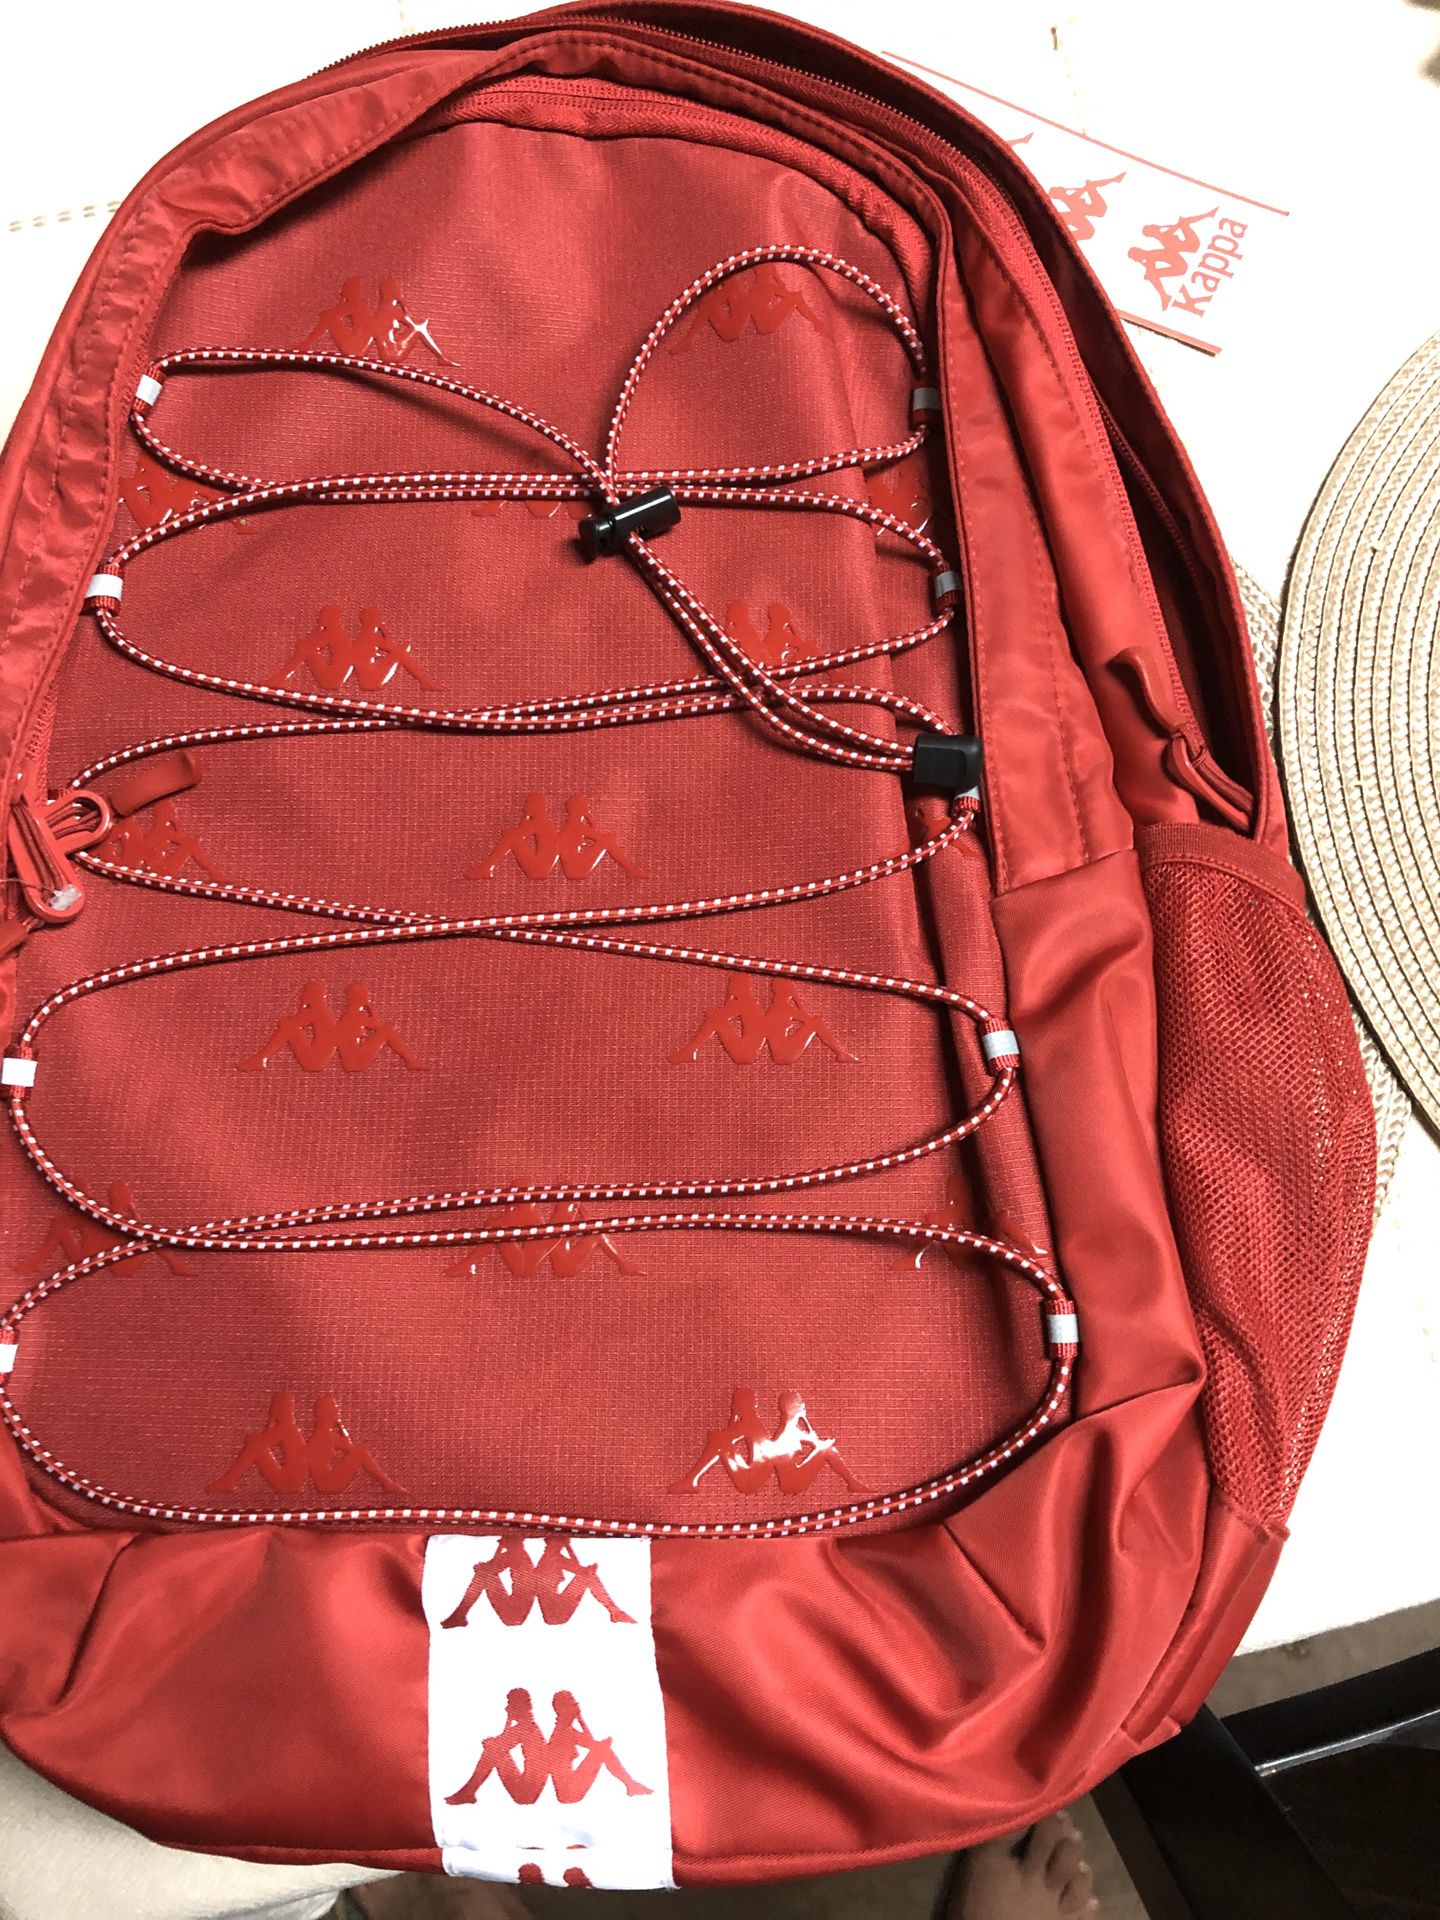 Banda Astar kappa backpack